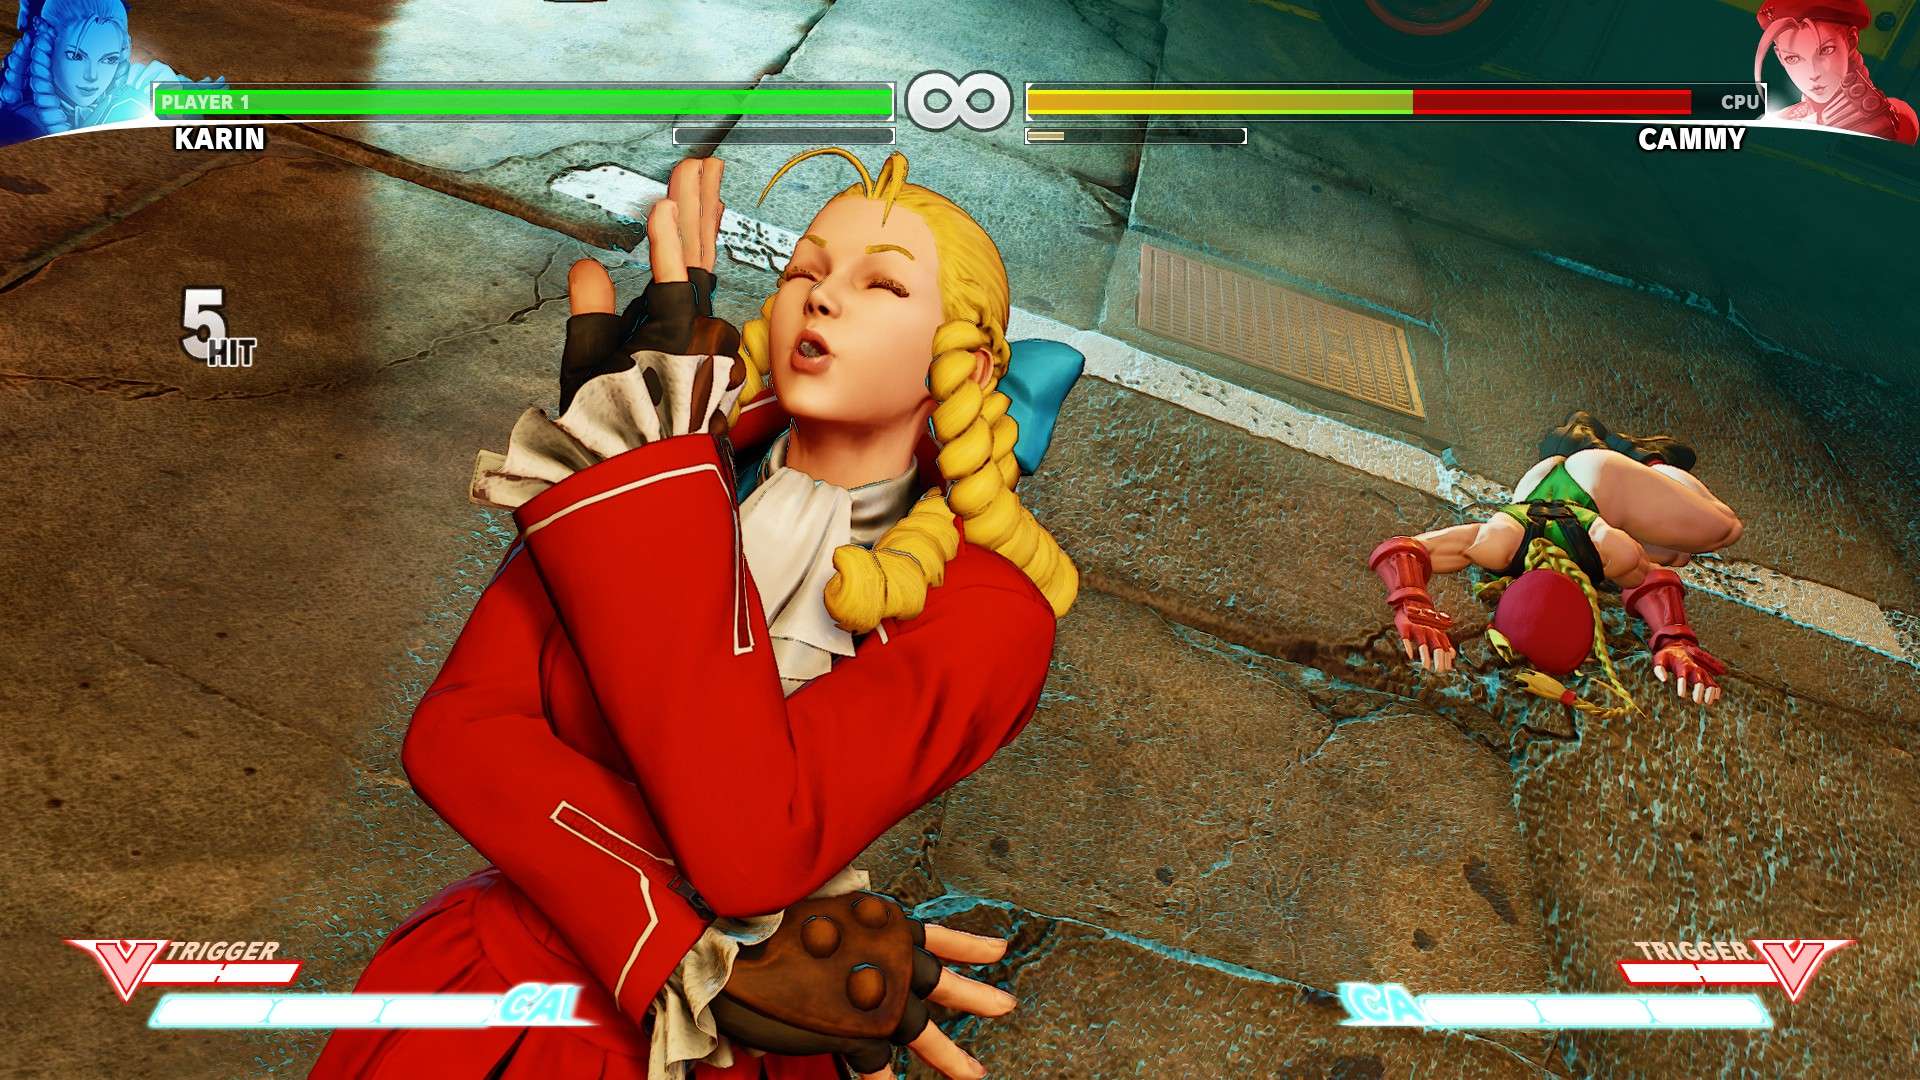 Street Fighter V - Cammy Arcade Mode (HARD) 